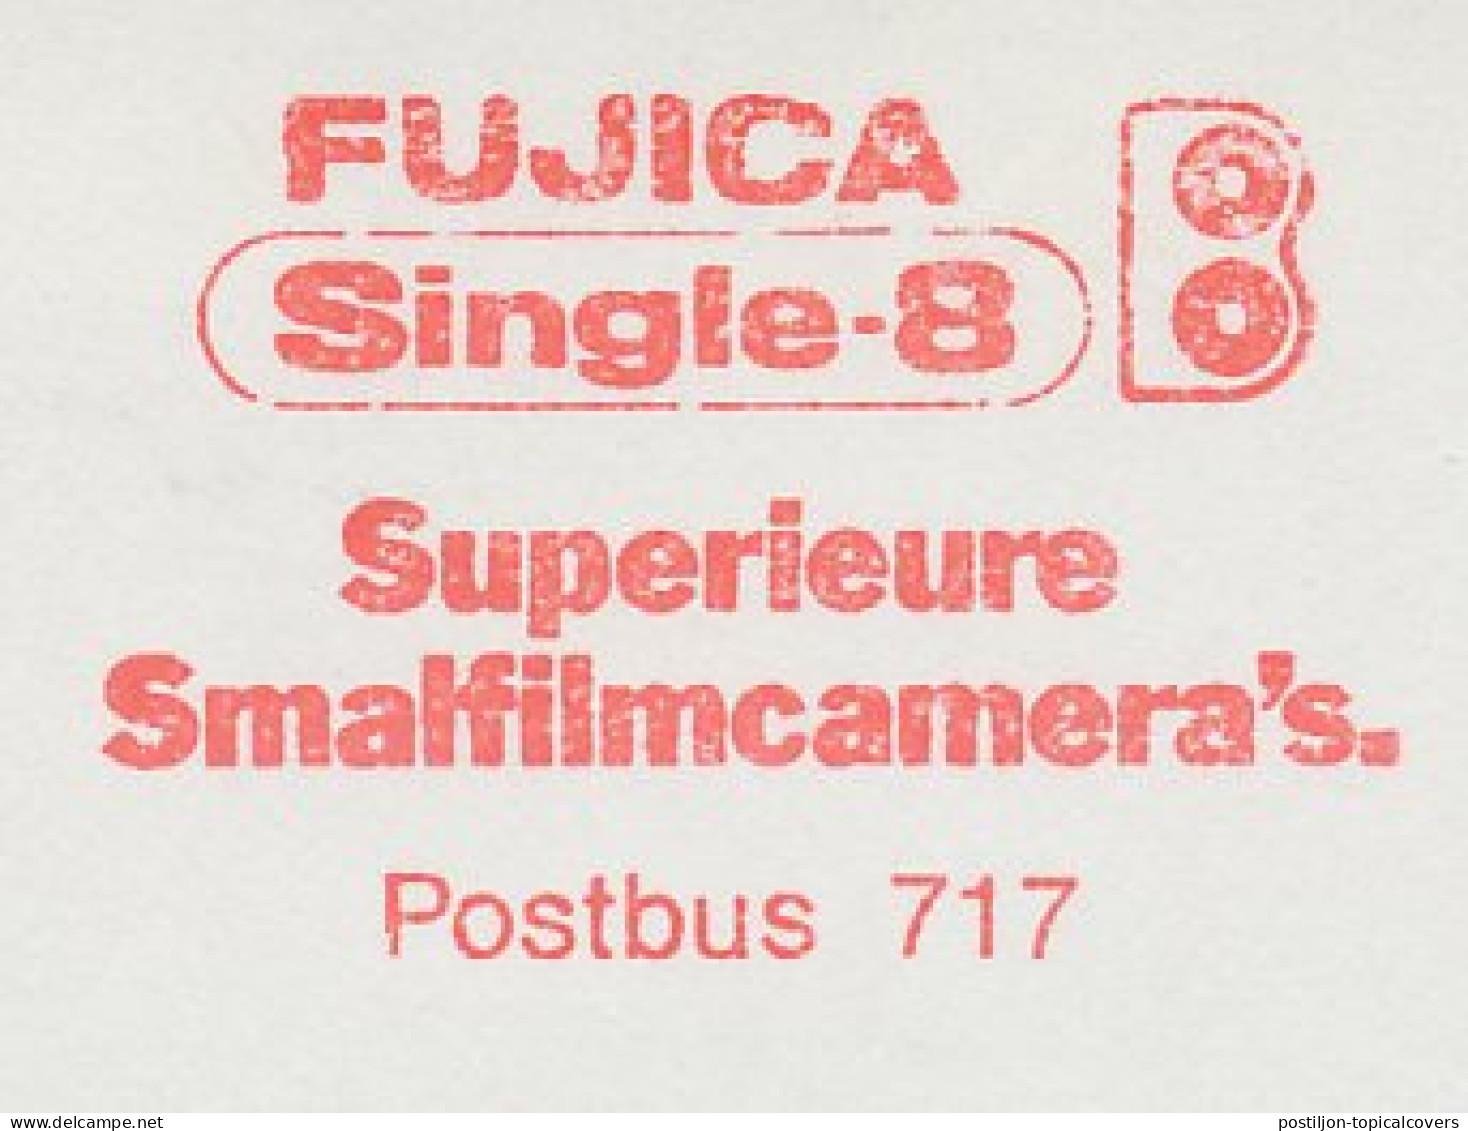 Meter Cut Netherlands 1983 Smallfilm Camera - Fujica Single 8 - Kino